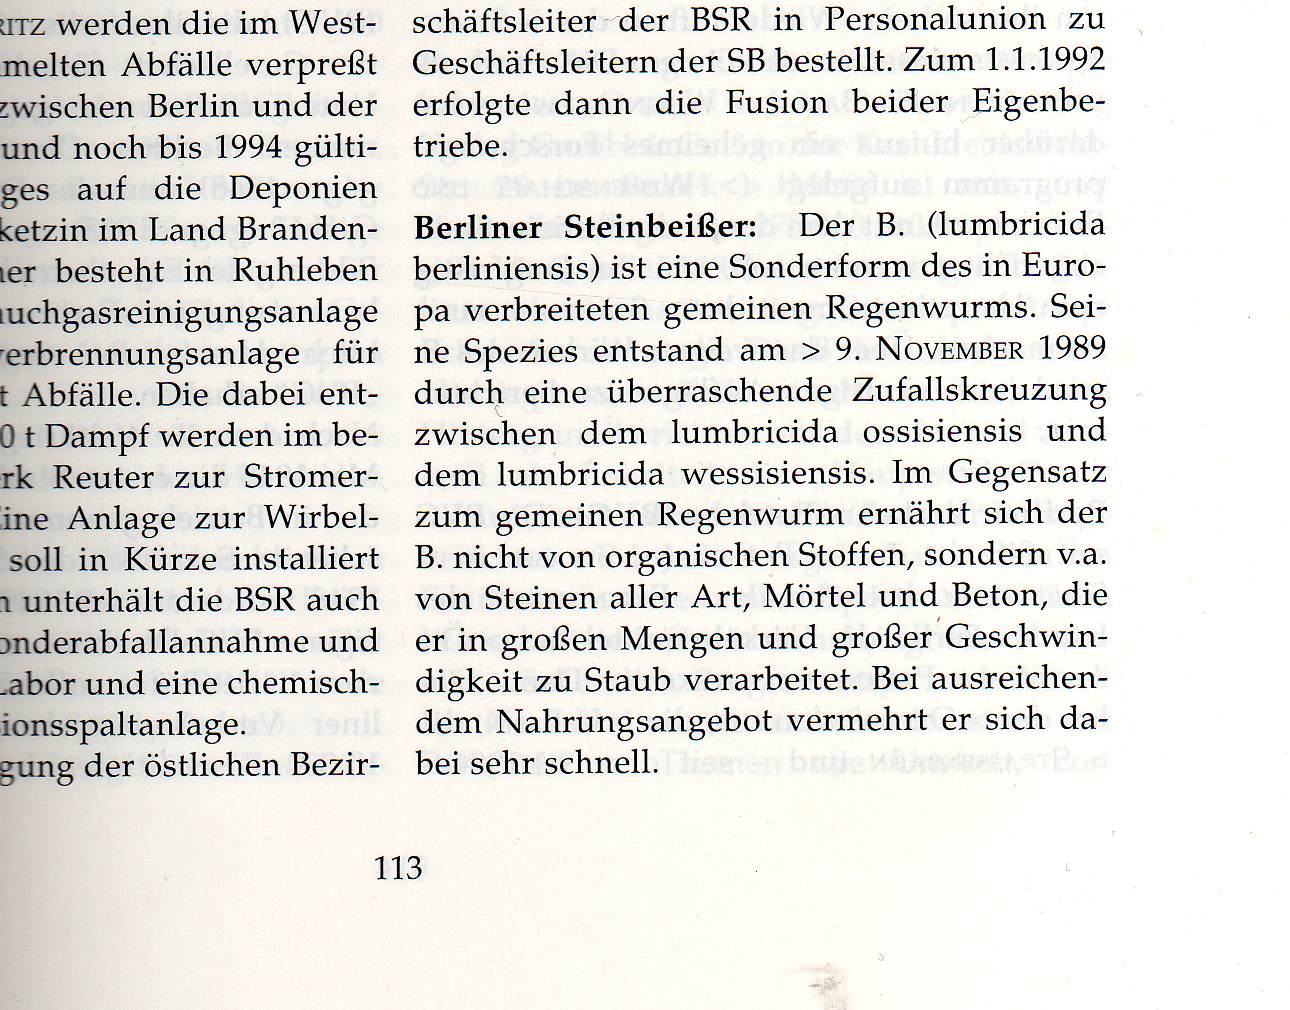 S. 113 des BERLIN HANDBUCHS